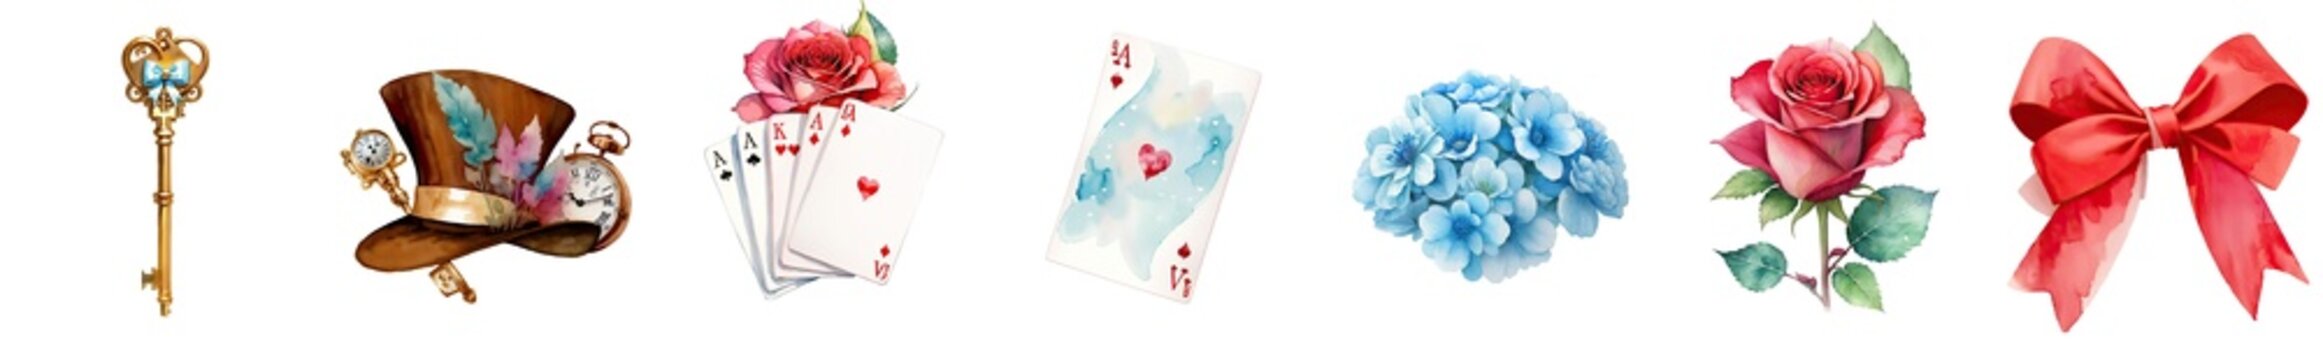 Watercolor Alice in Wonderland Elements Mad Hatter Tea Party Clipart Keys Cards Tea Pot